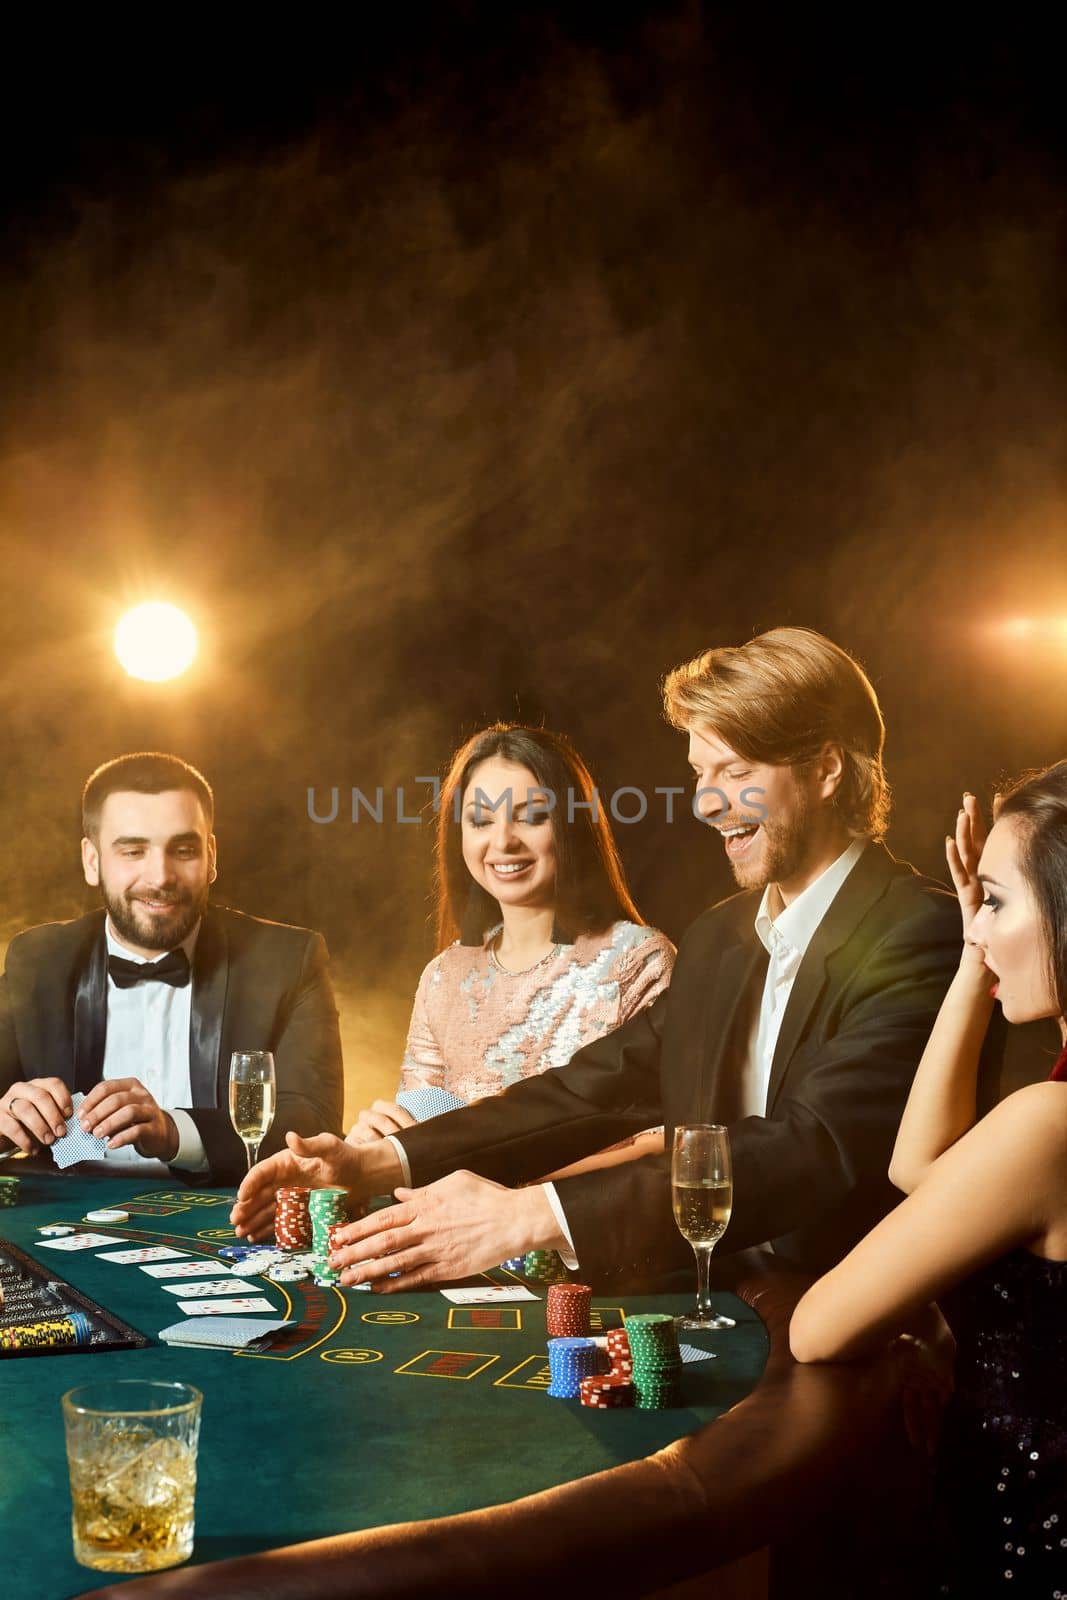 Upper class friends gambling in a casino. Two men in suits and two young women in dresses. Smoke. Casino. Poker